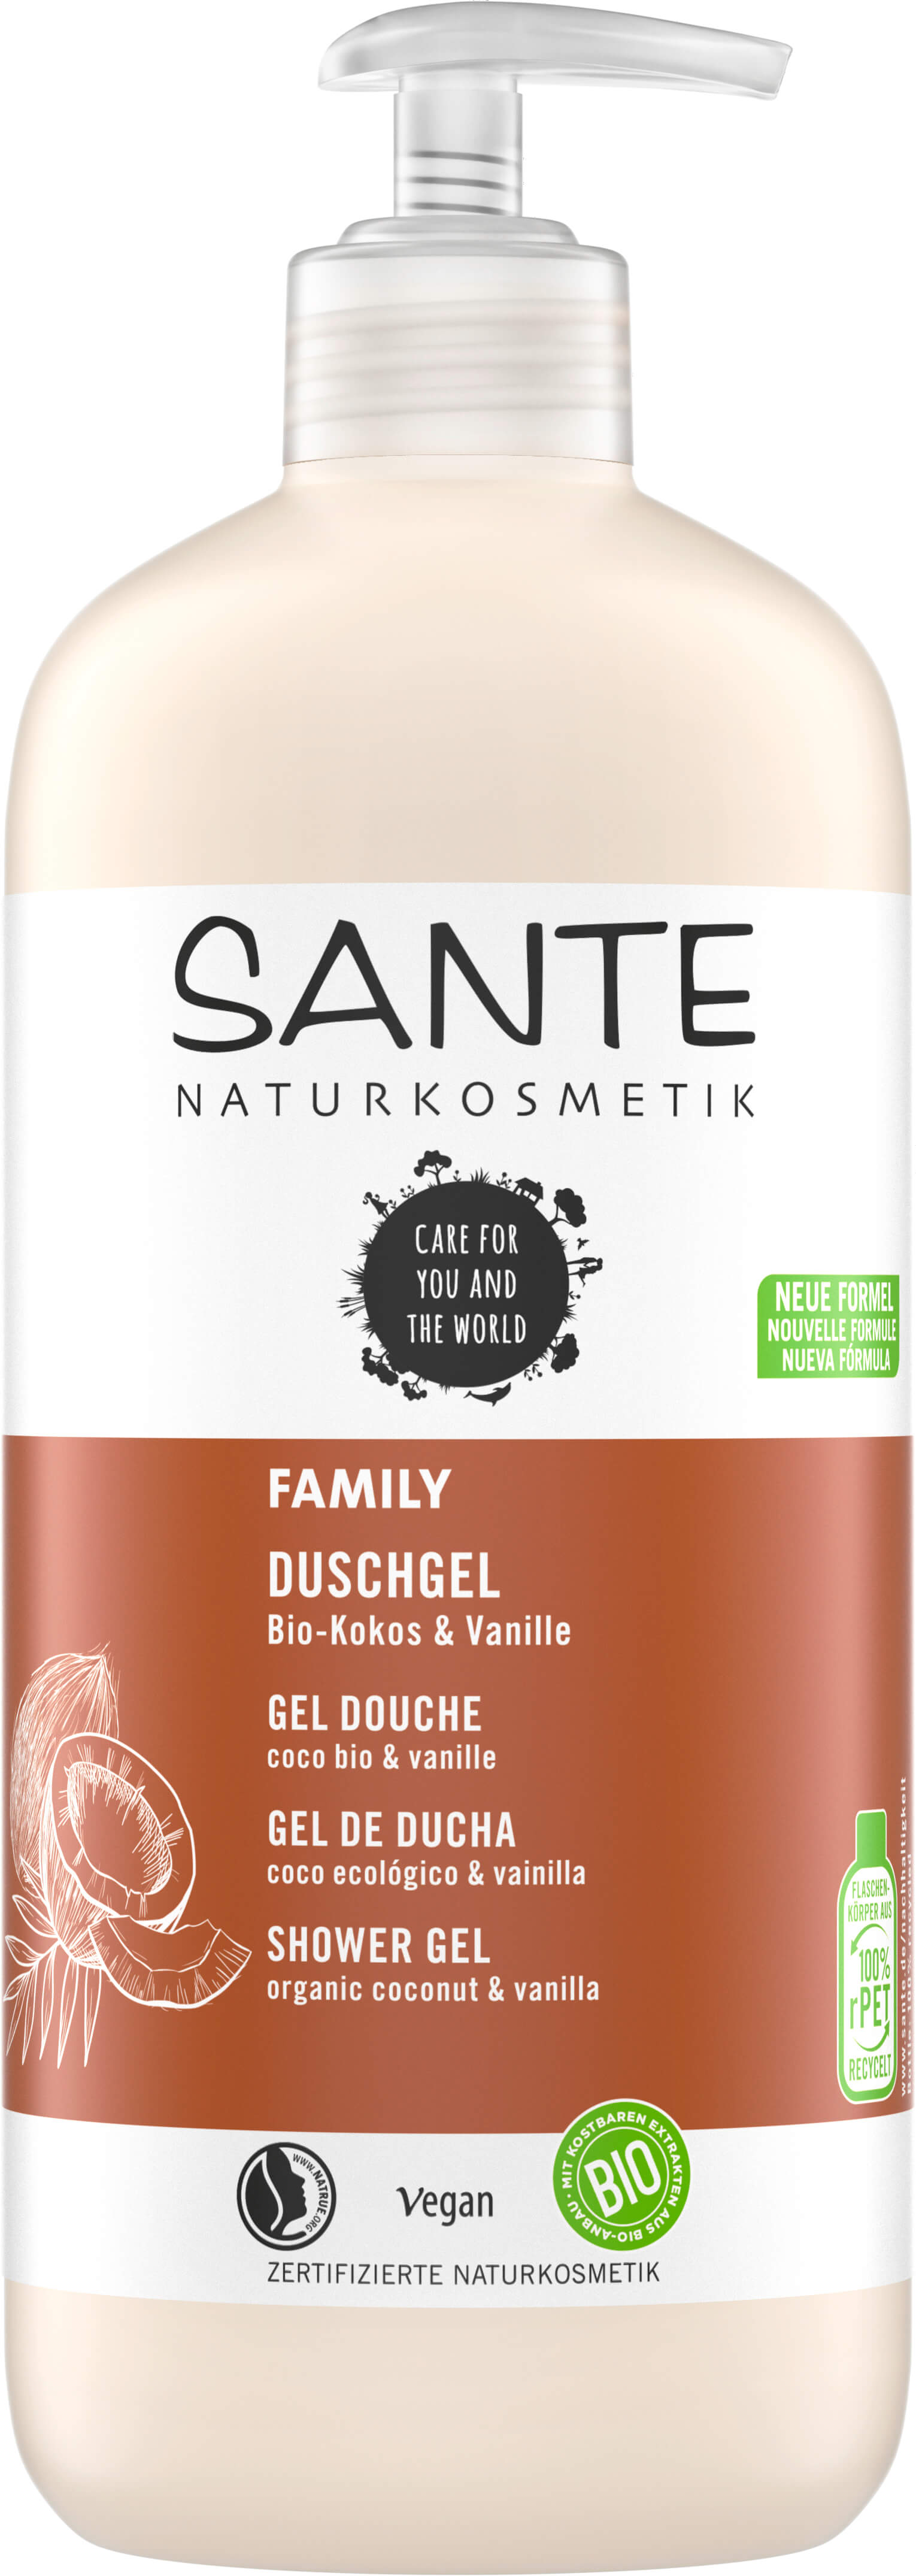 Duschgel Bio-Kokos & Vanille | SANTE Naturkosmetik